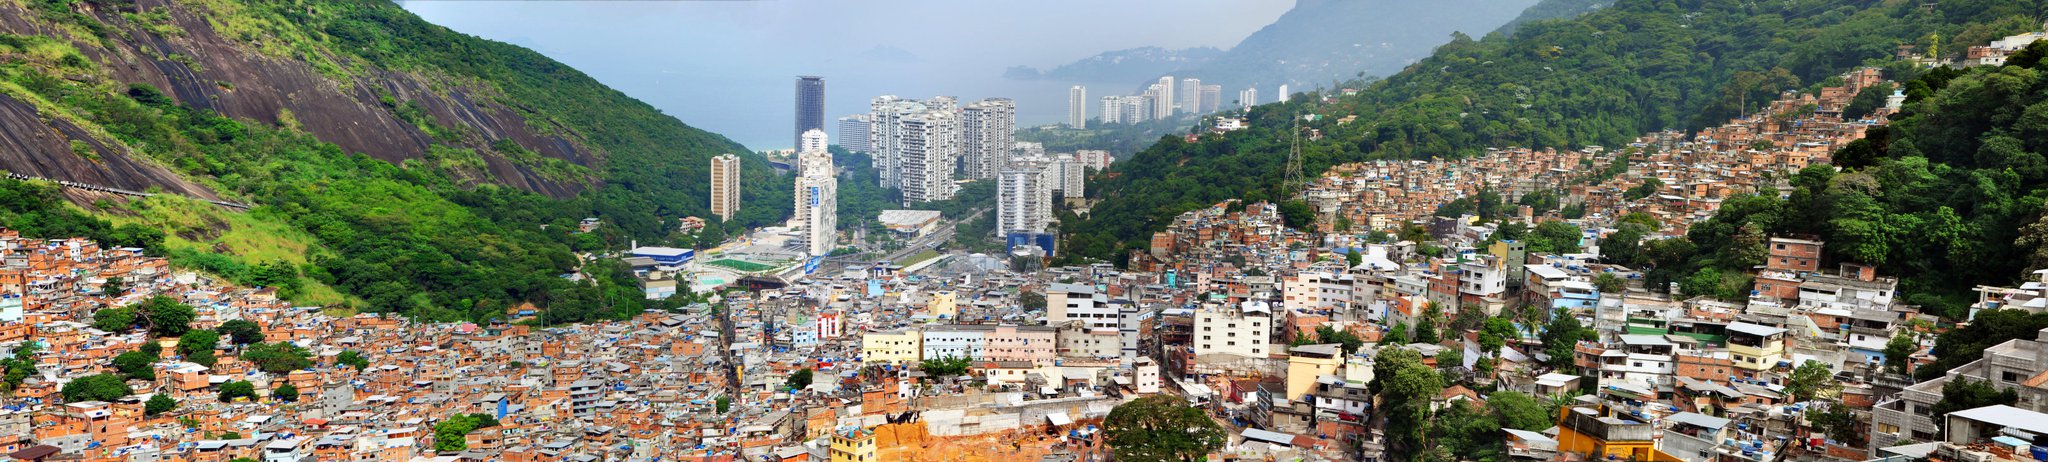 Panorama da favela da Rocinha, Rio de Janeiro